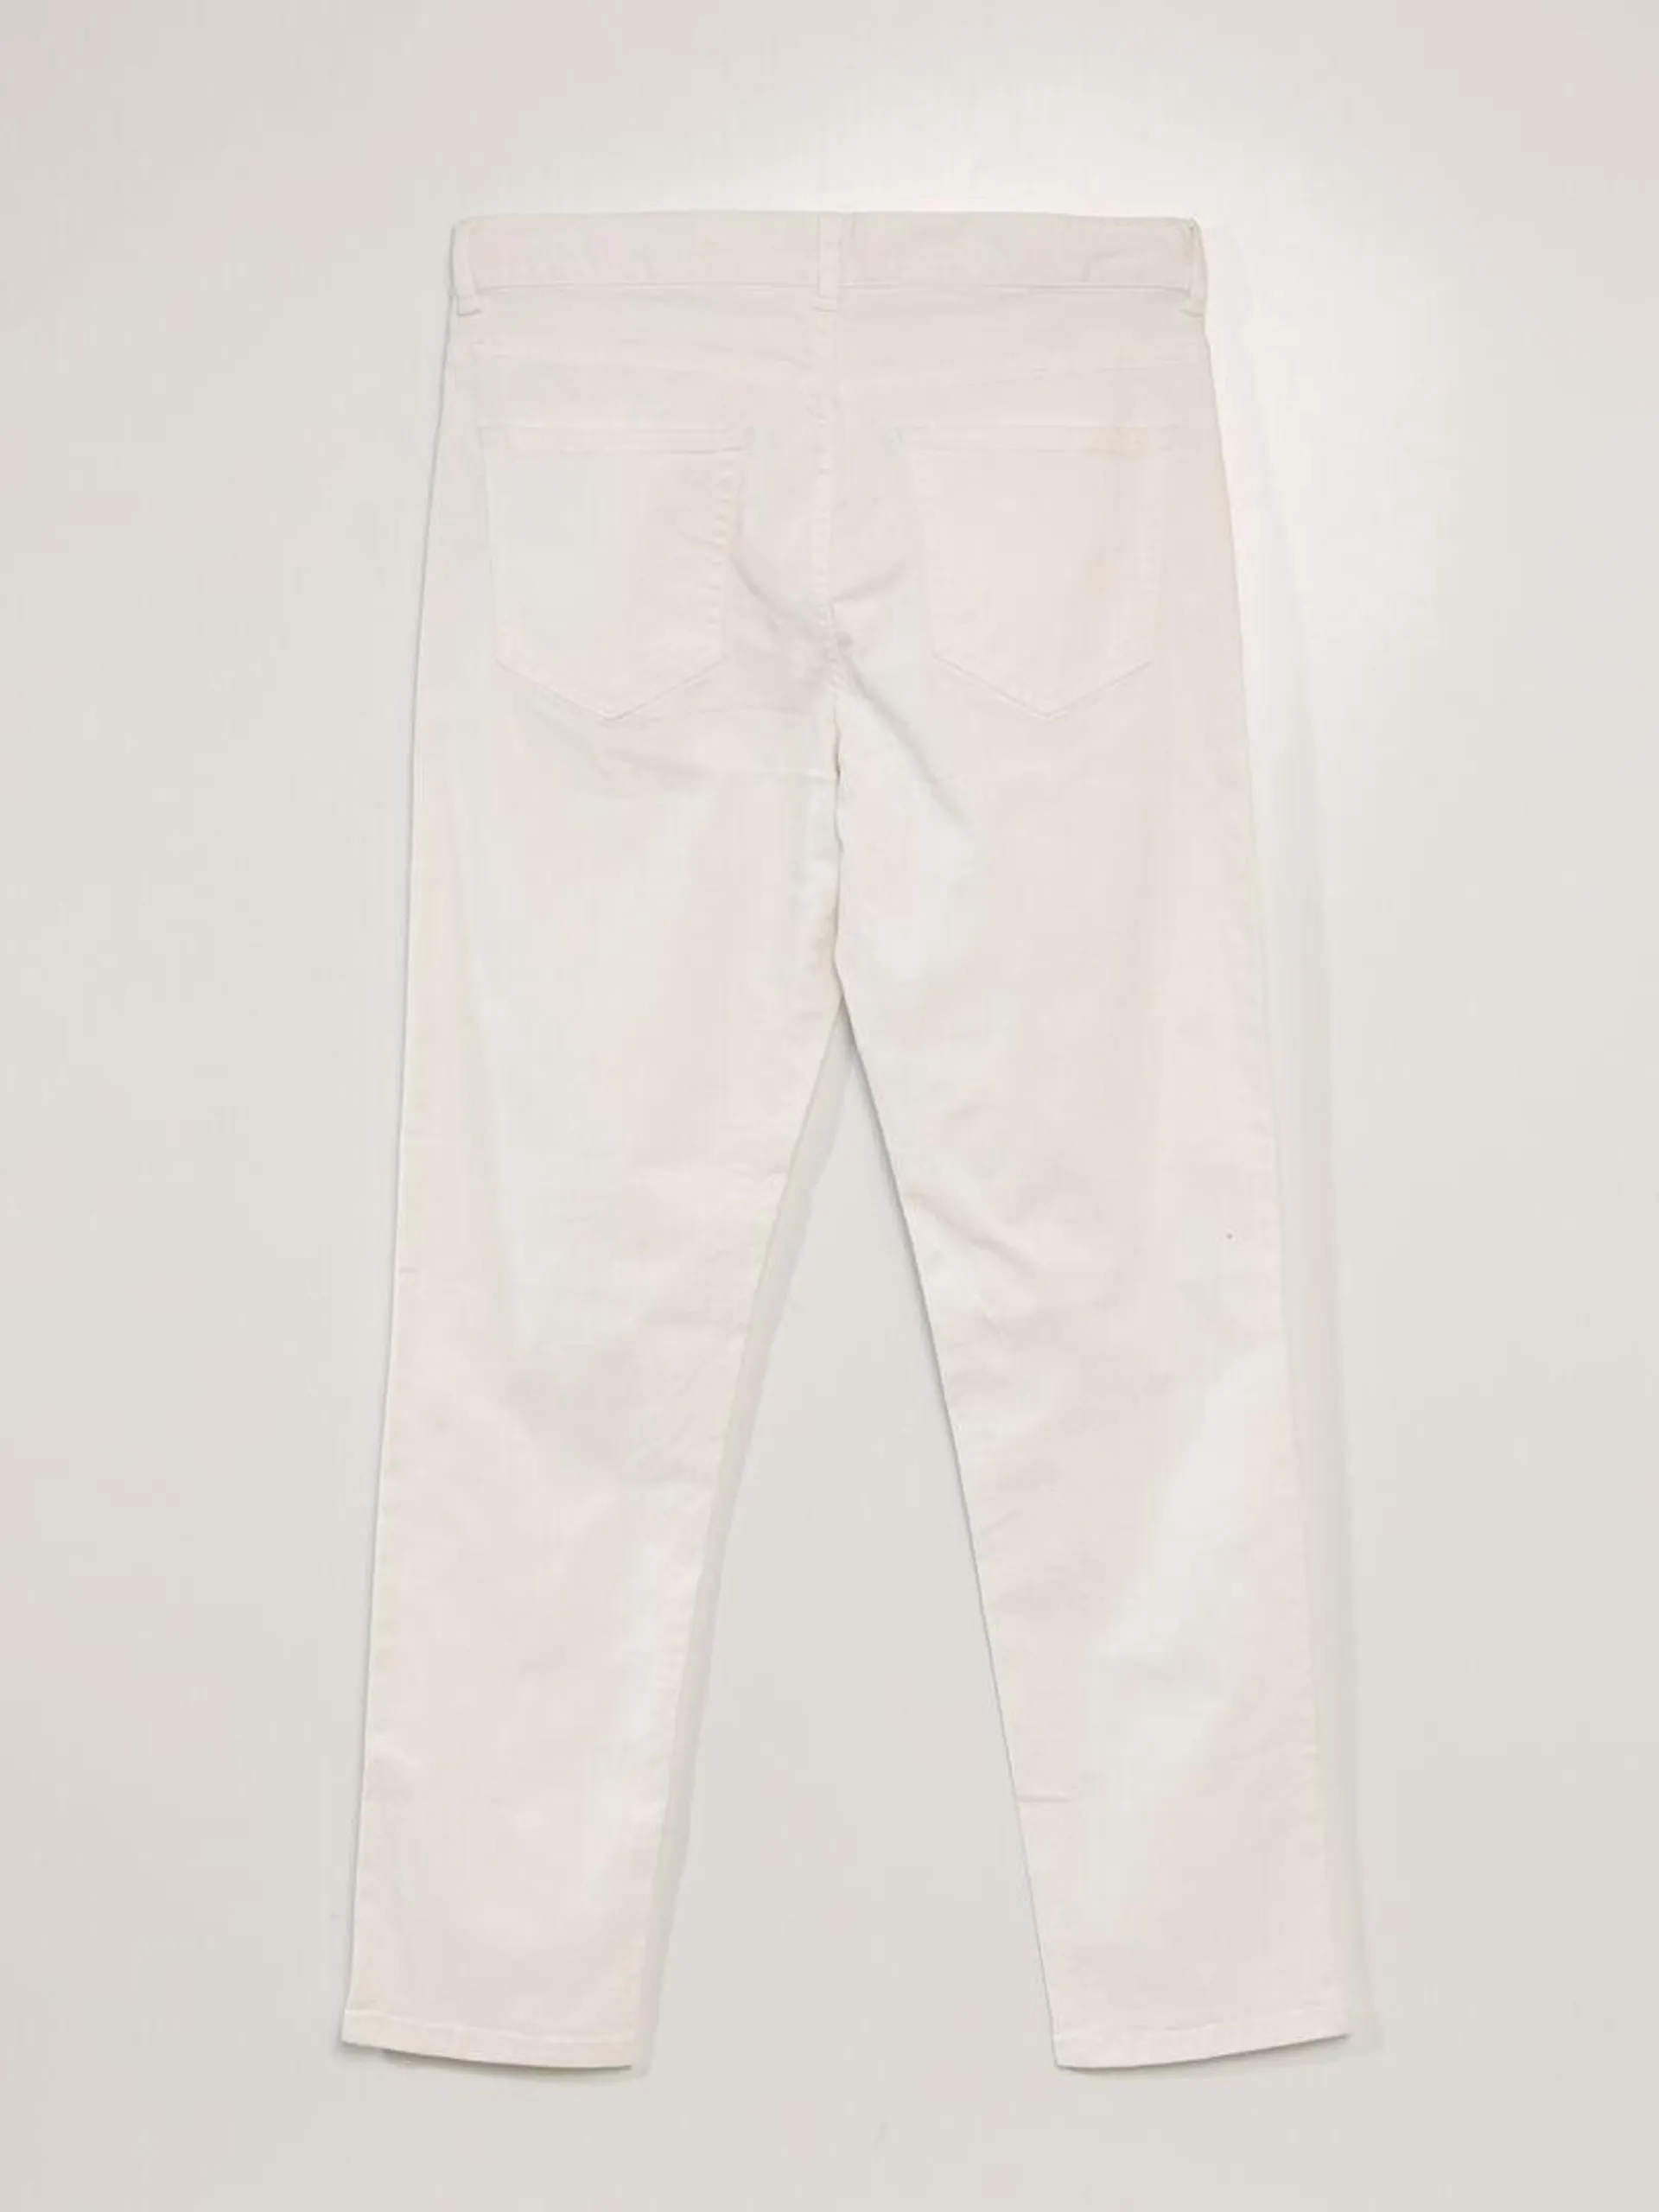 Jean slim 5 poches - L32 - blanc